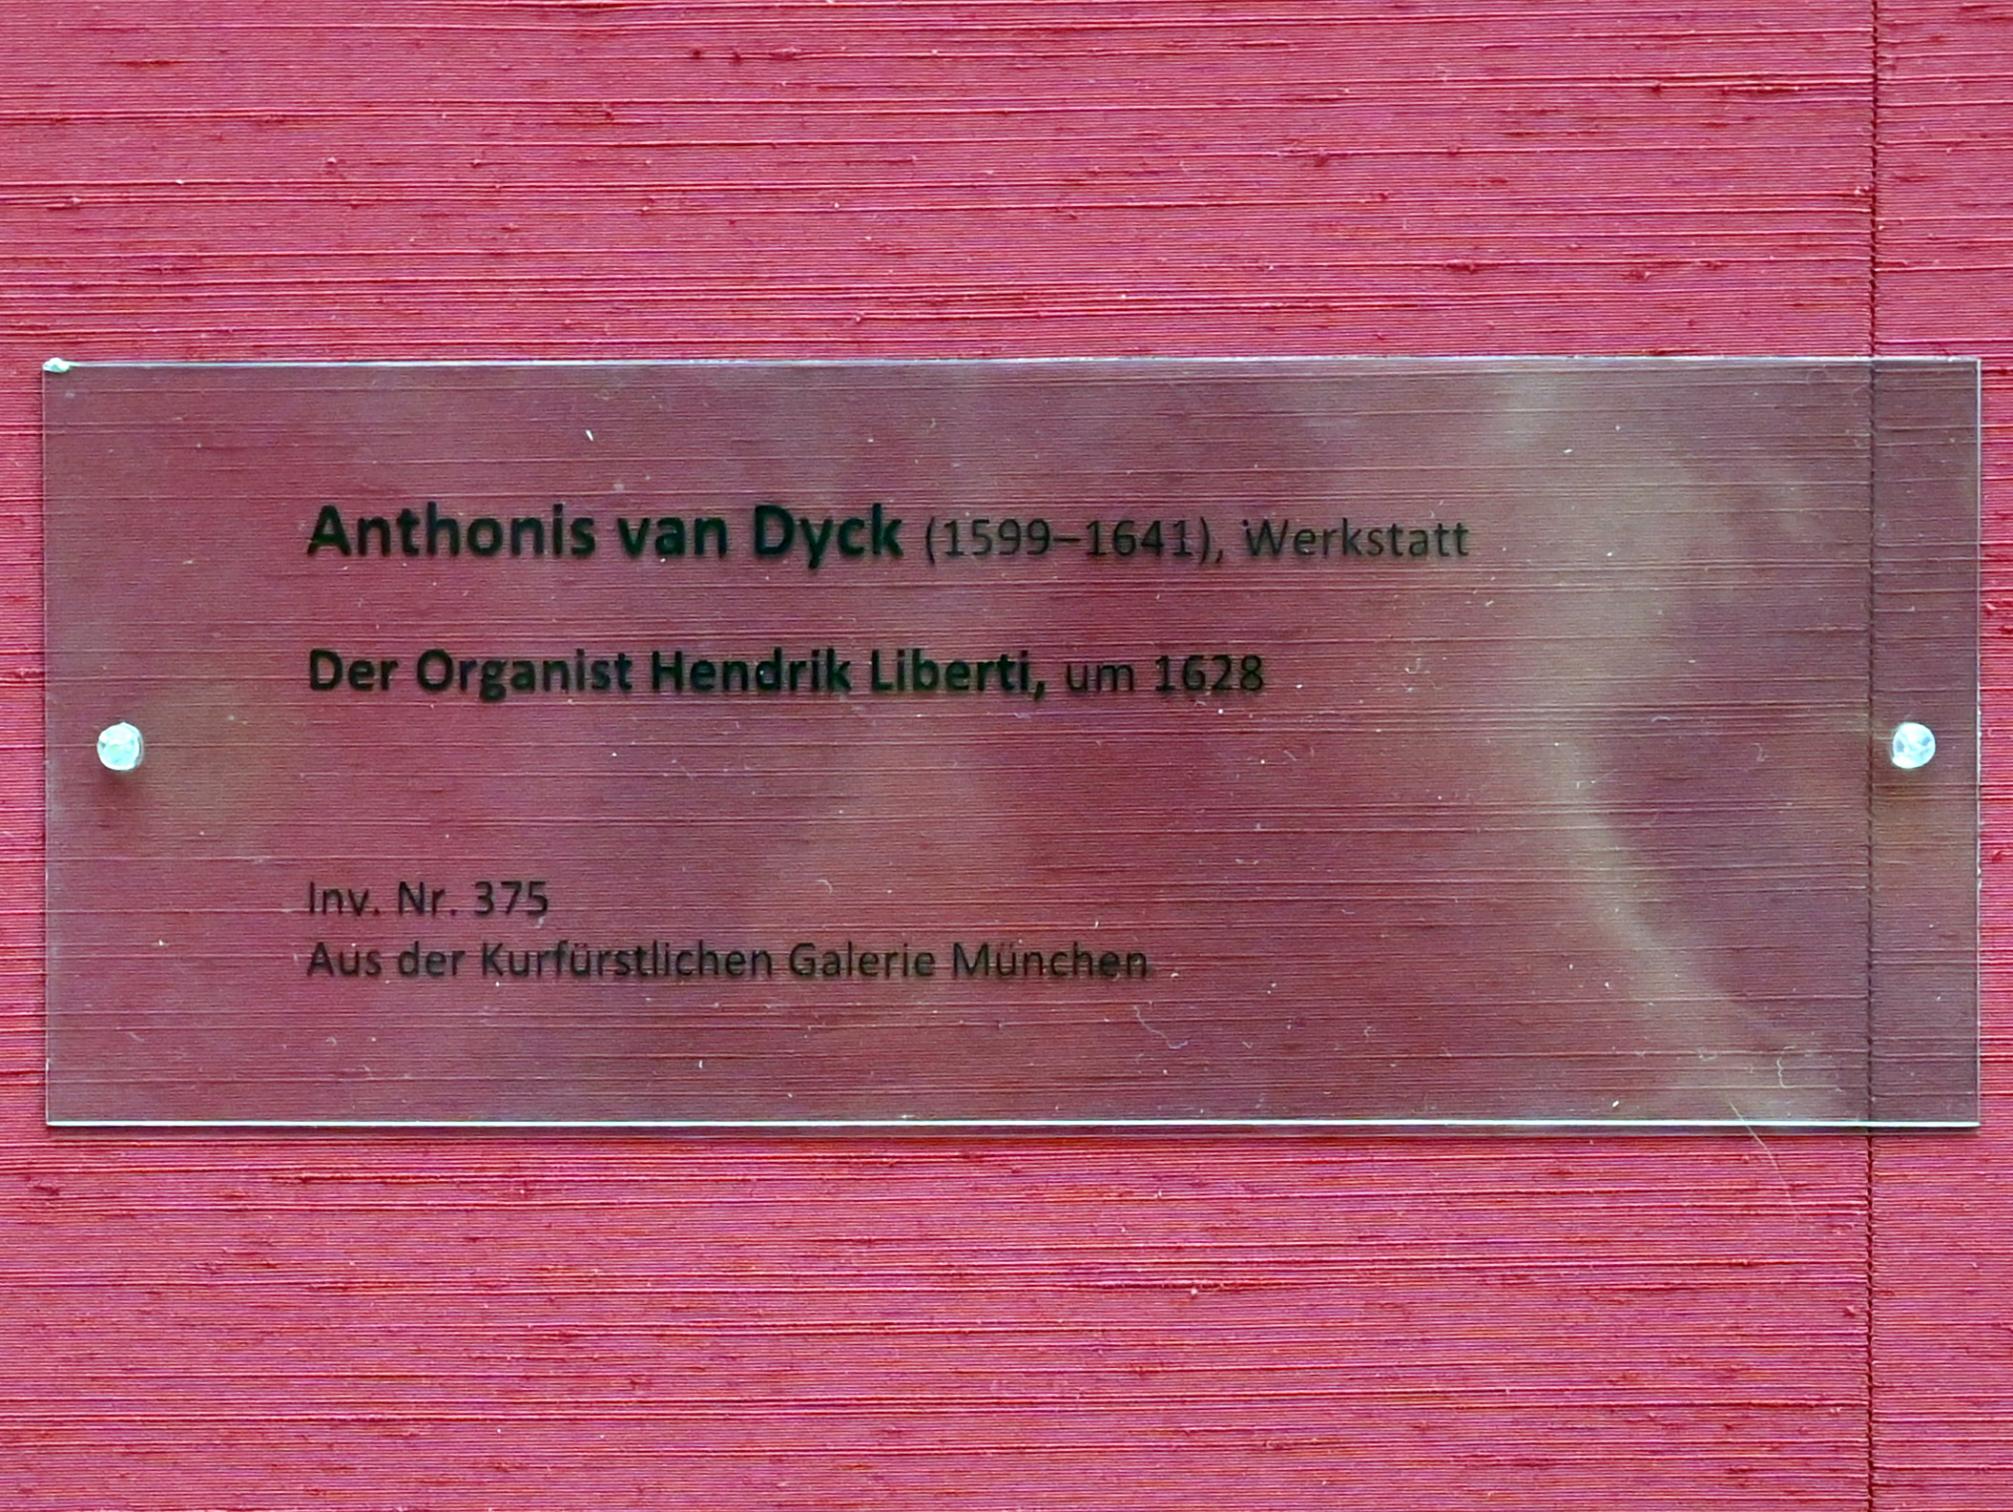 Anthonis (Anton) van Dyck (Werkstatt) (1619–1636), Der Organist Hendrik Liberti, München, Alte Pinakothek, Obergeschoss Saal VI, um 1628, Bild 2/2